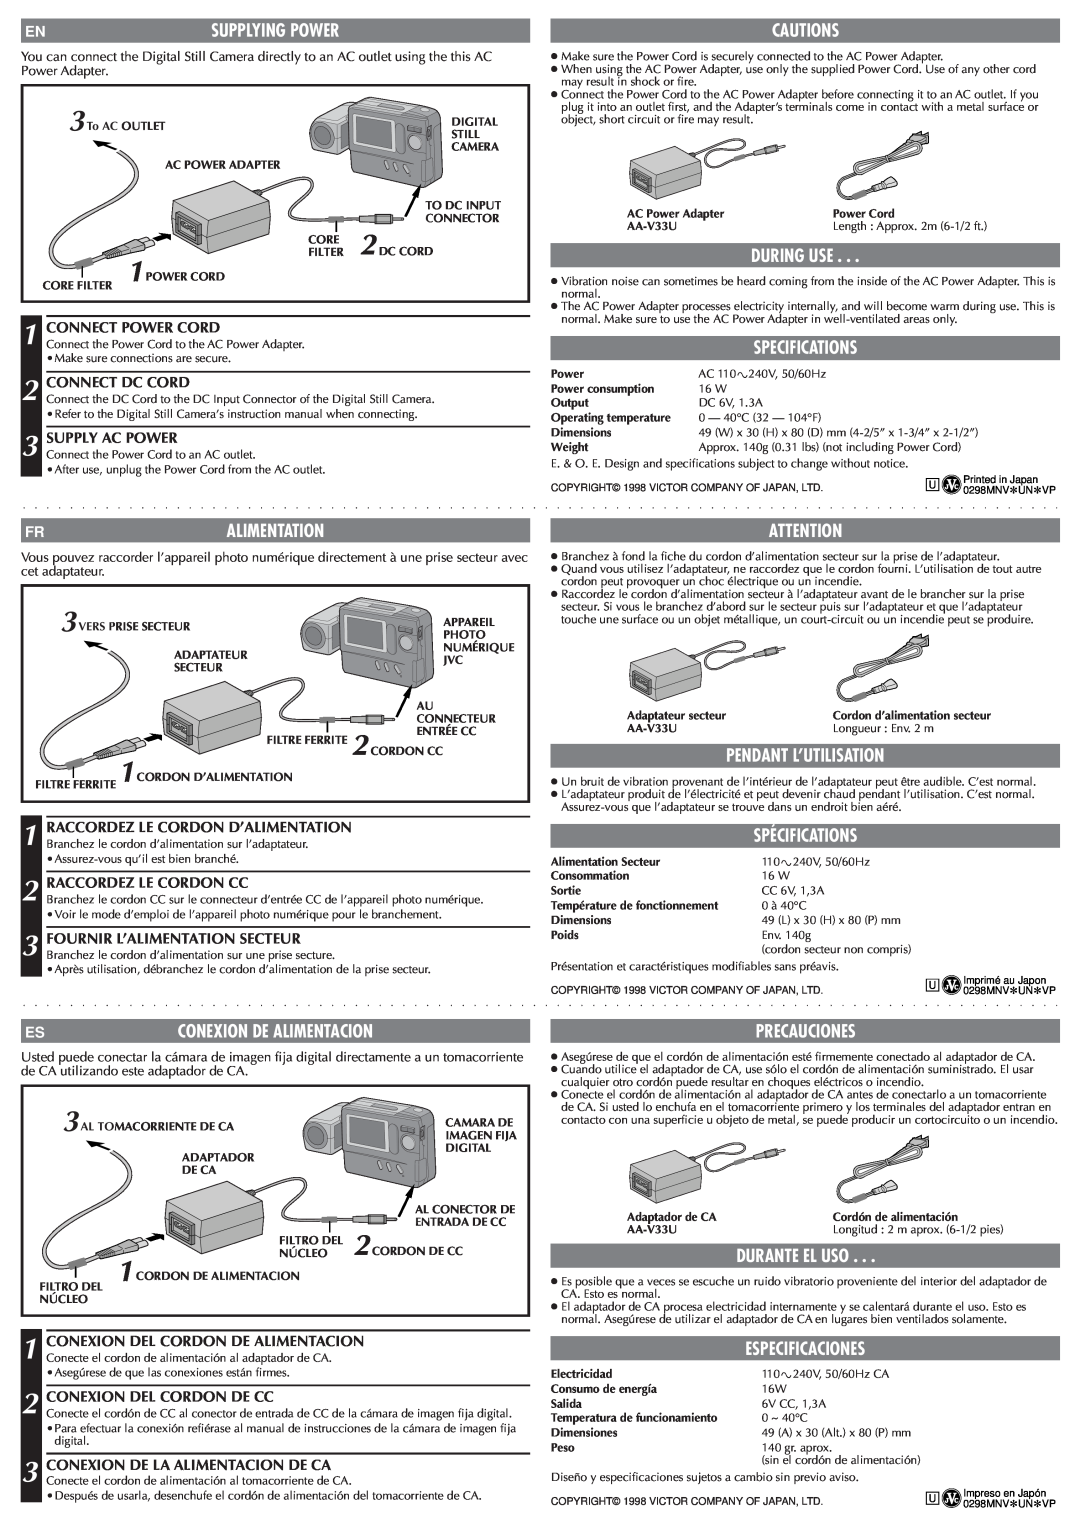 JVC AA-V33U Cautions, During Use, Specifications, Fralimentation, Pendant L’Utilisation, Spécifications, Precauciones 